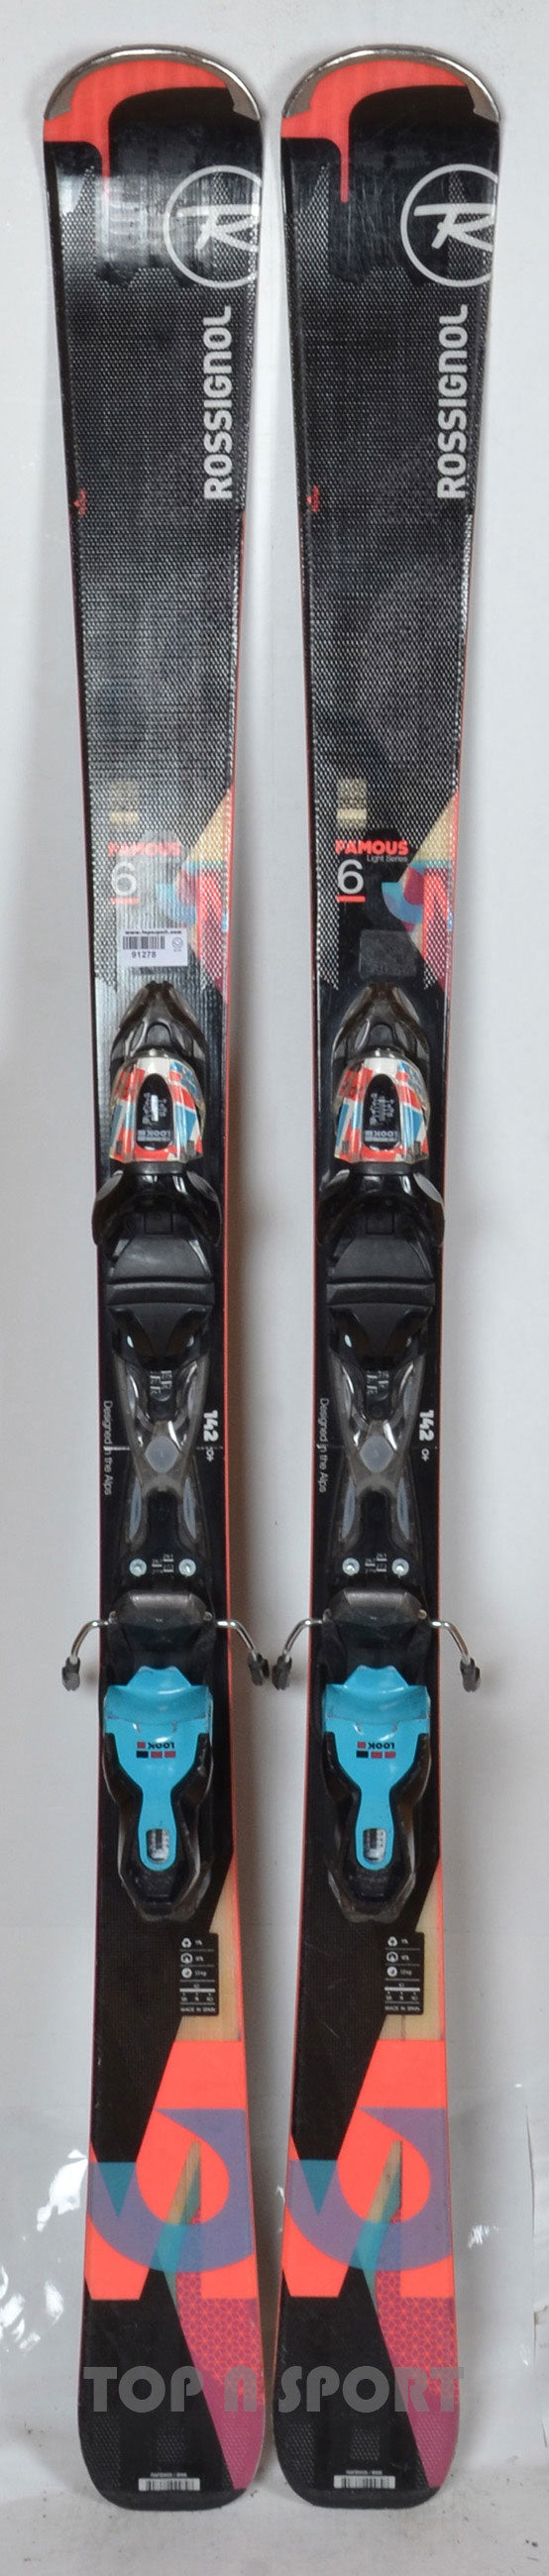 Rossignol FAMOUS 6 black - skis d'occasion Femme